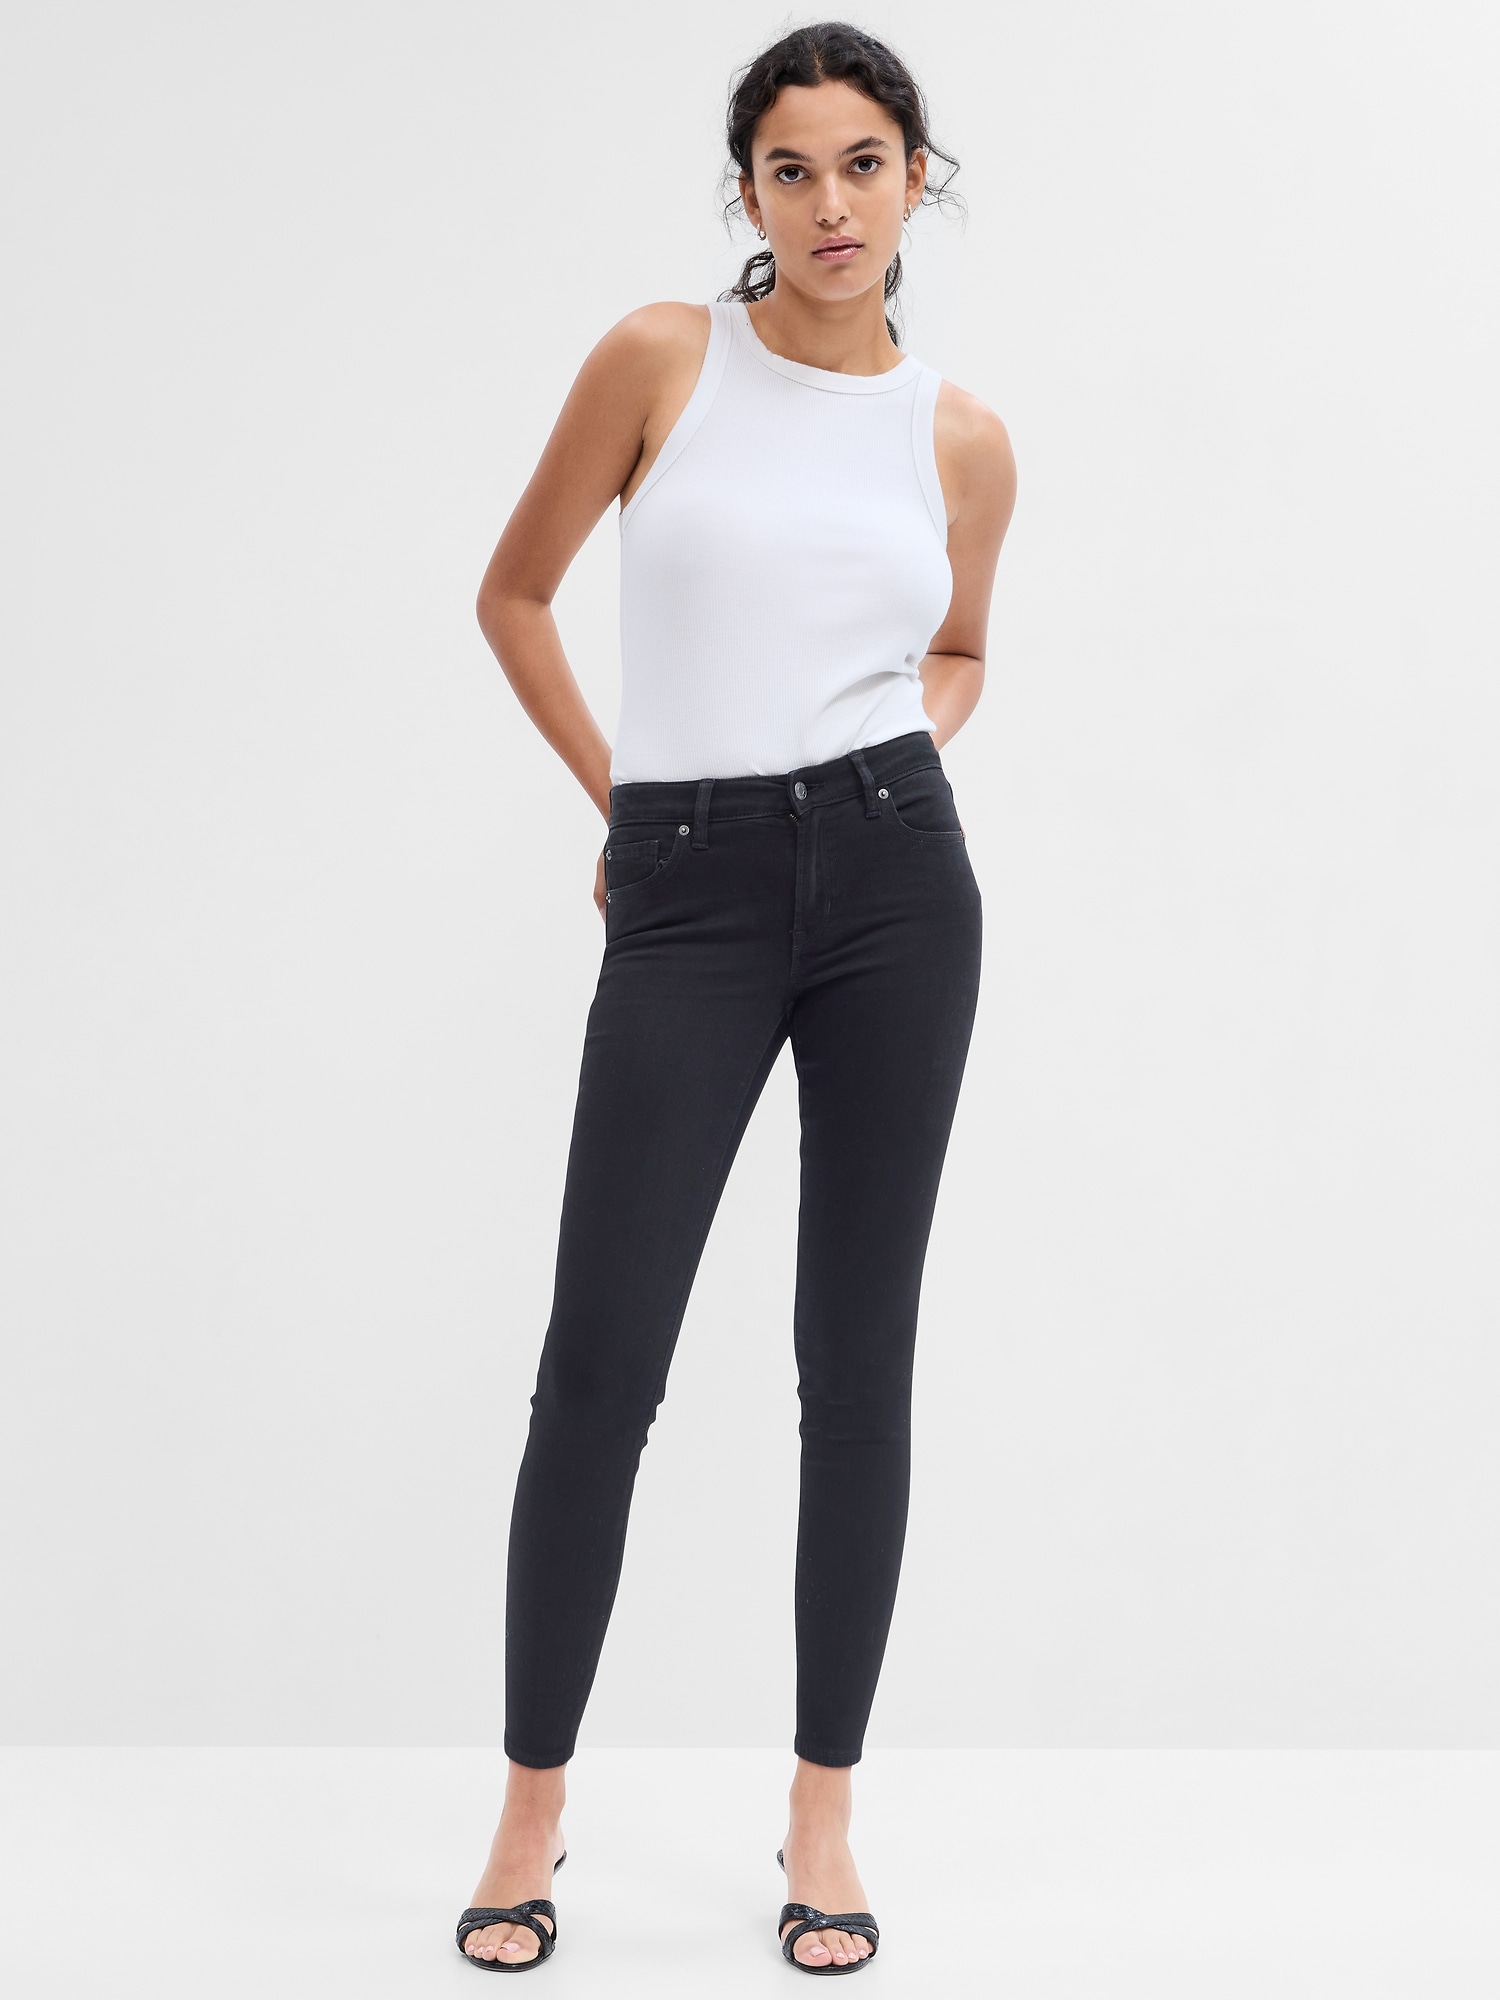 Buy Black Jeans & Jeggings for Women by KRAUS Online | Ajio.com